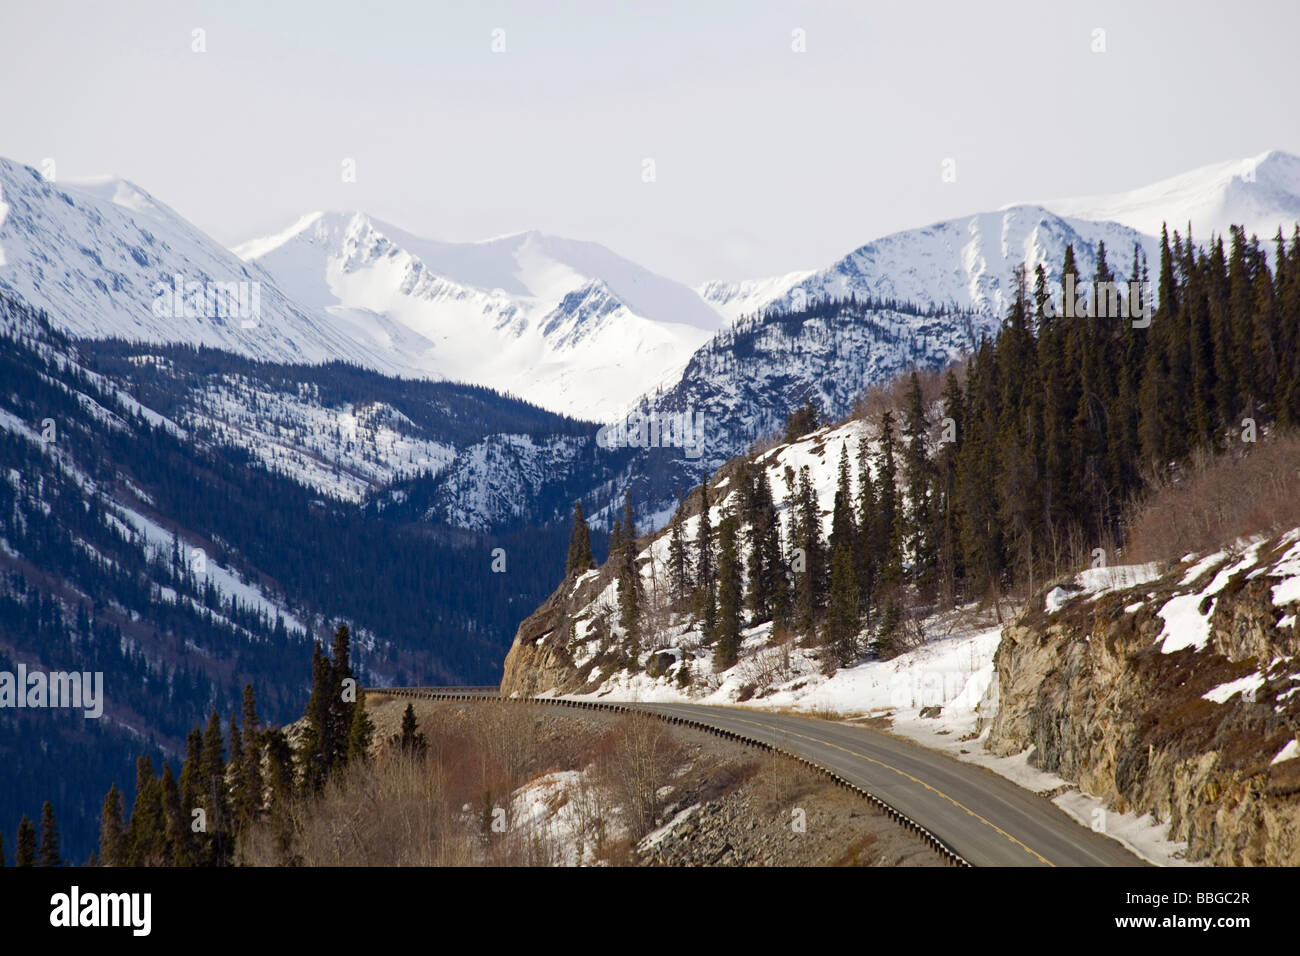 Aussichtsreichen South Klondike Highway in Richtung White Pass, Skagway, Alaska, British Columbia, Yukon Territorium, Kanada, Nordamerika Stockfoto